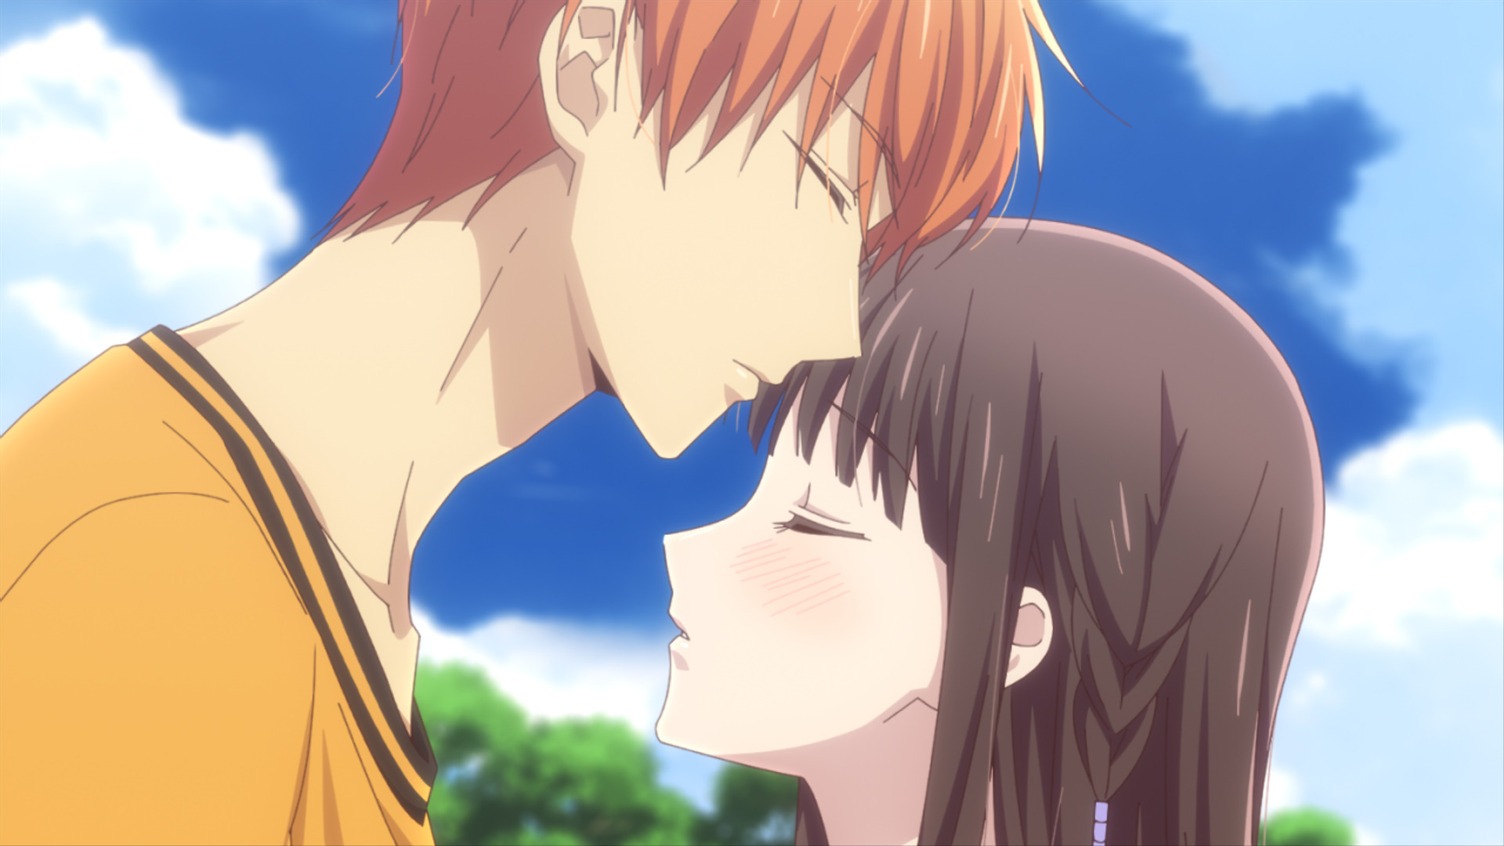 romance anime with kiss scene｜TikTok Search